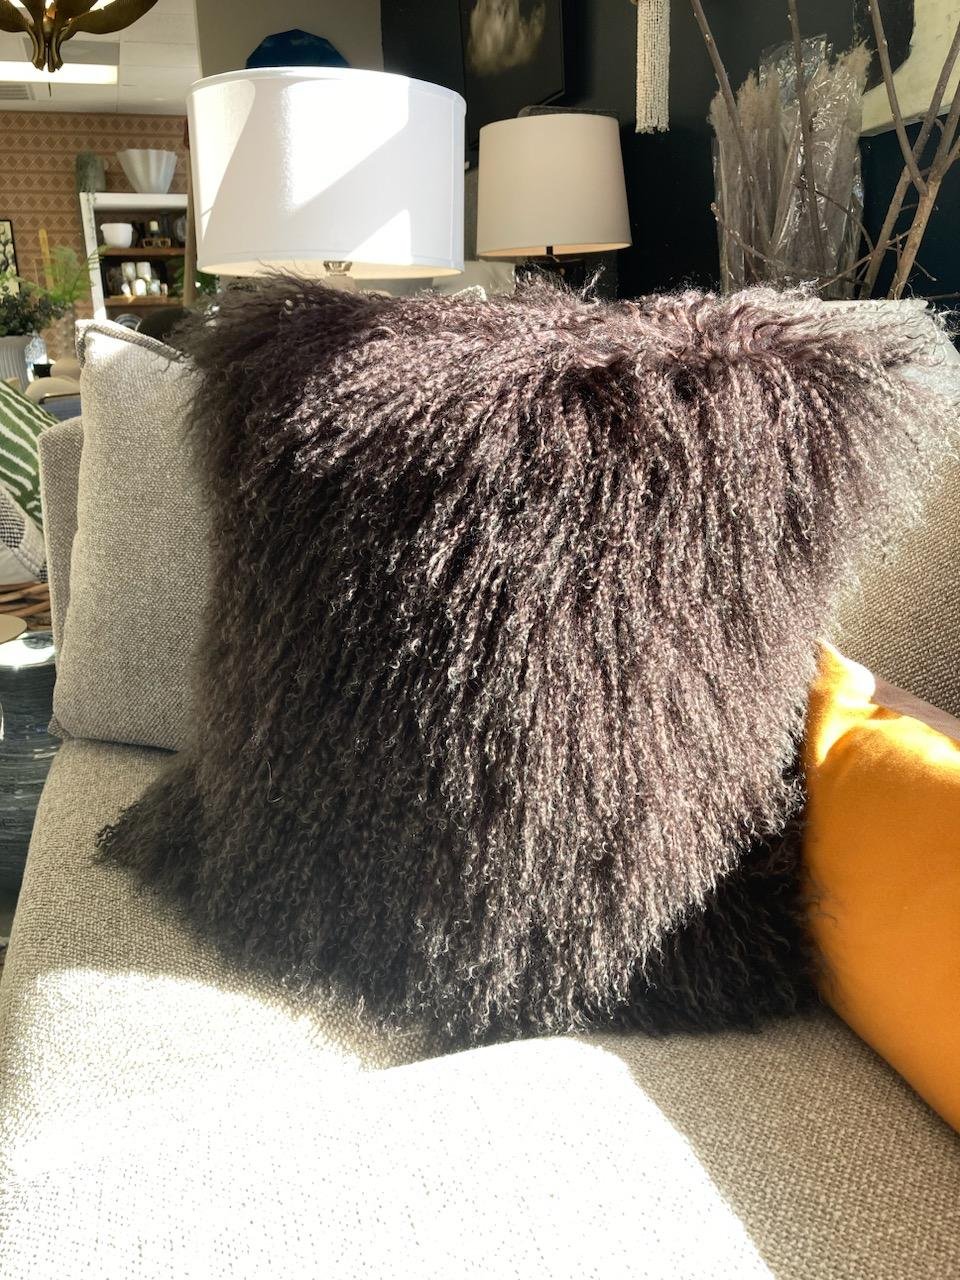 Black Mongolian Tibetan Lamb fur Pillow / Cushion